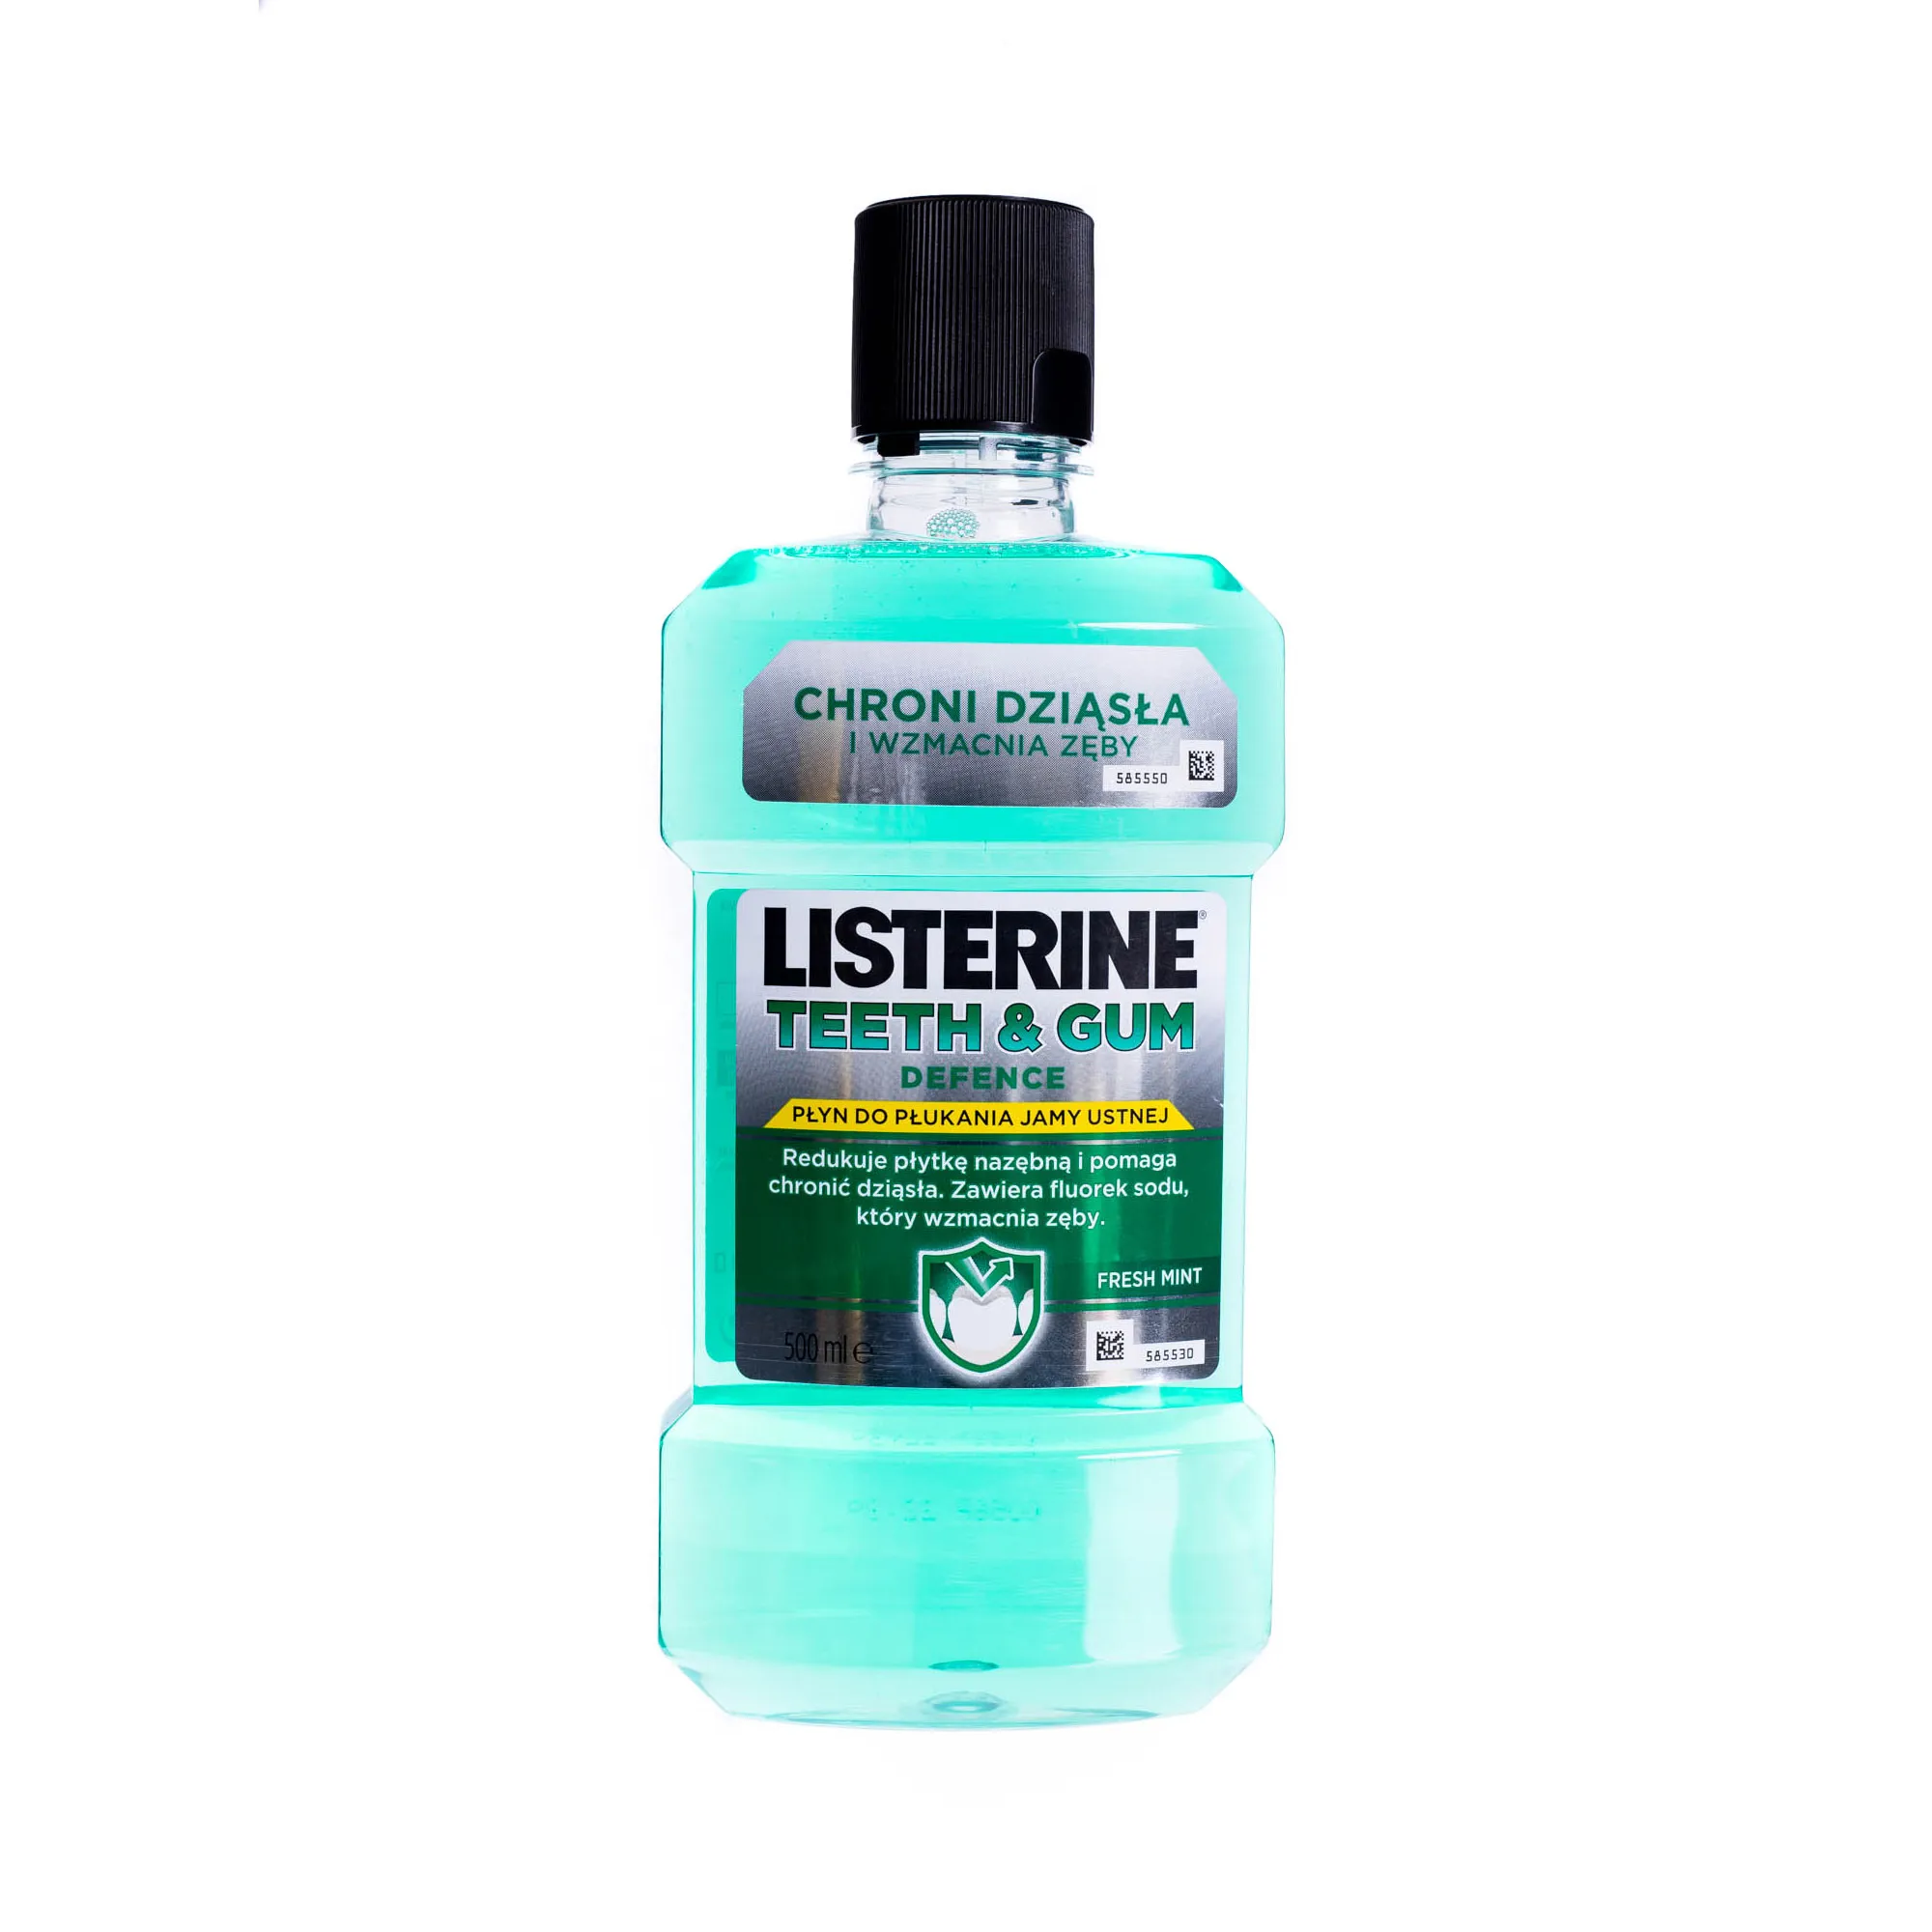 Listerine Teeth & Gum, Defence płyn do płukania jamy ustnej fresh mint 500 ml 